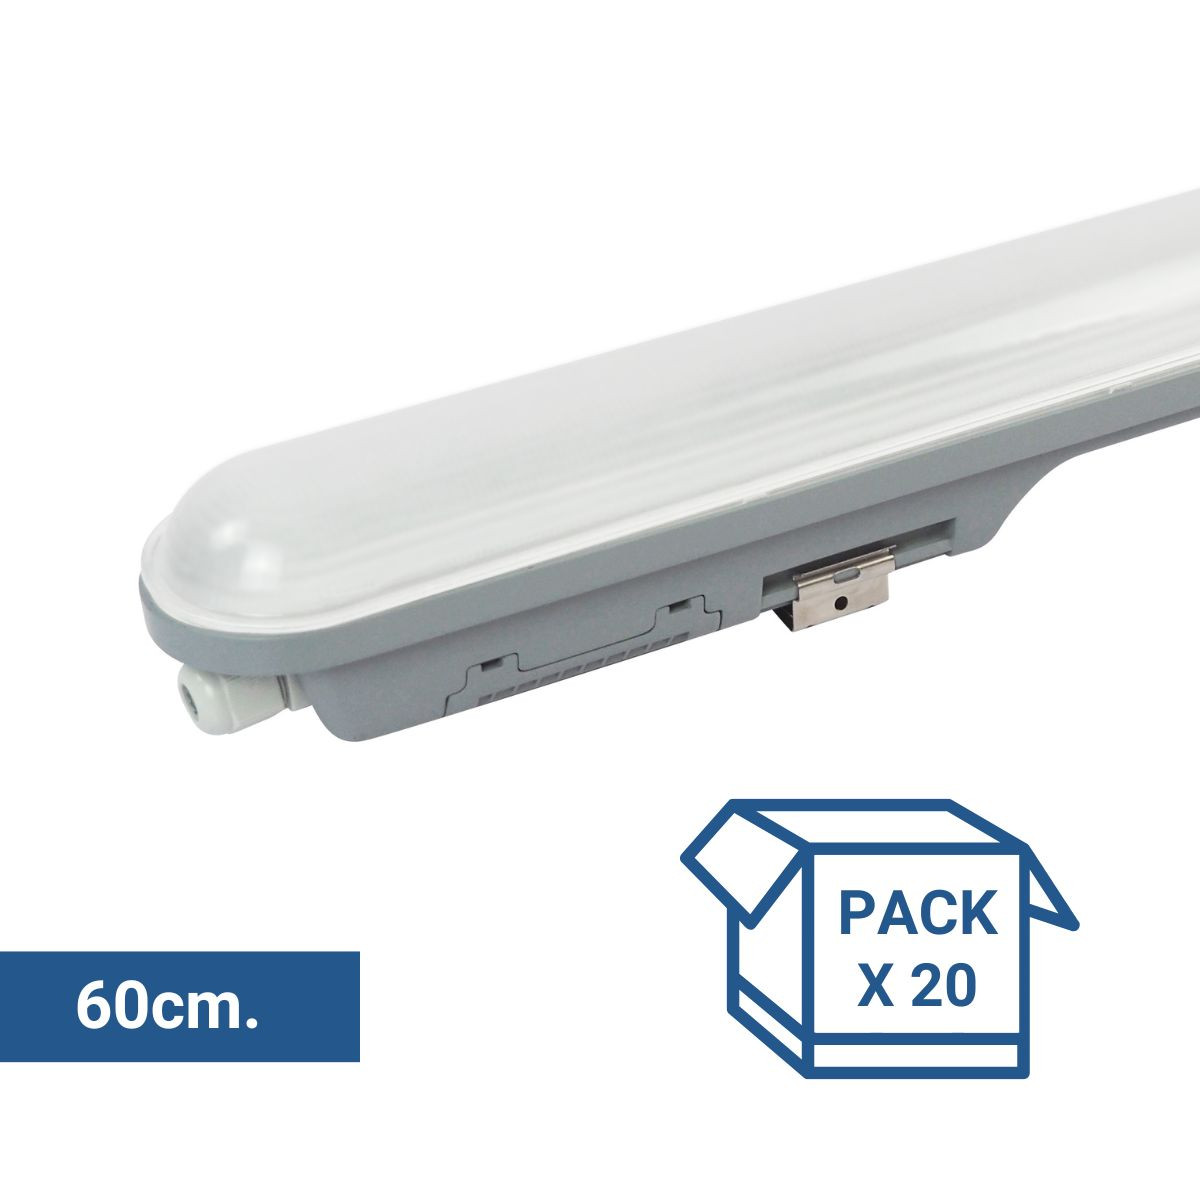 Pack x 20 - Plafoniera stagna LED collegabile - 9W - 60cm - IP65 - 4000K